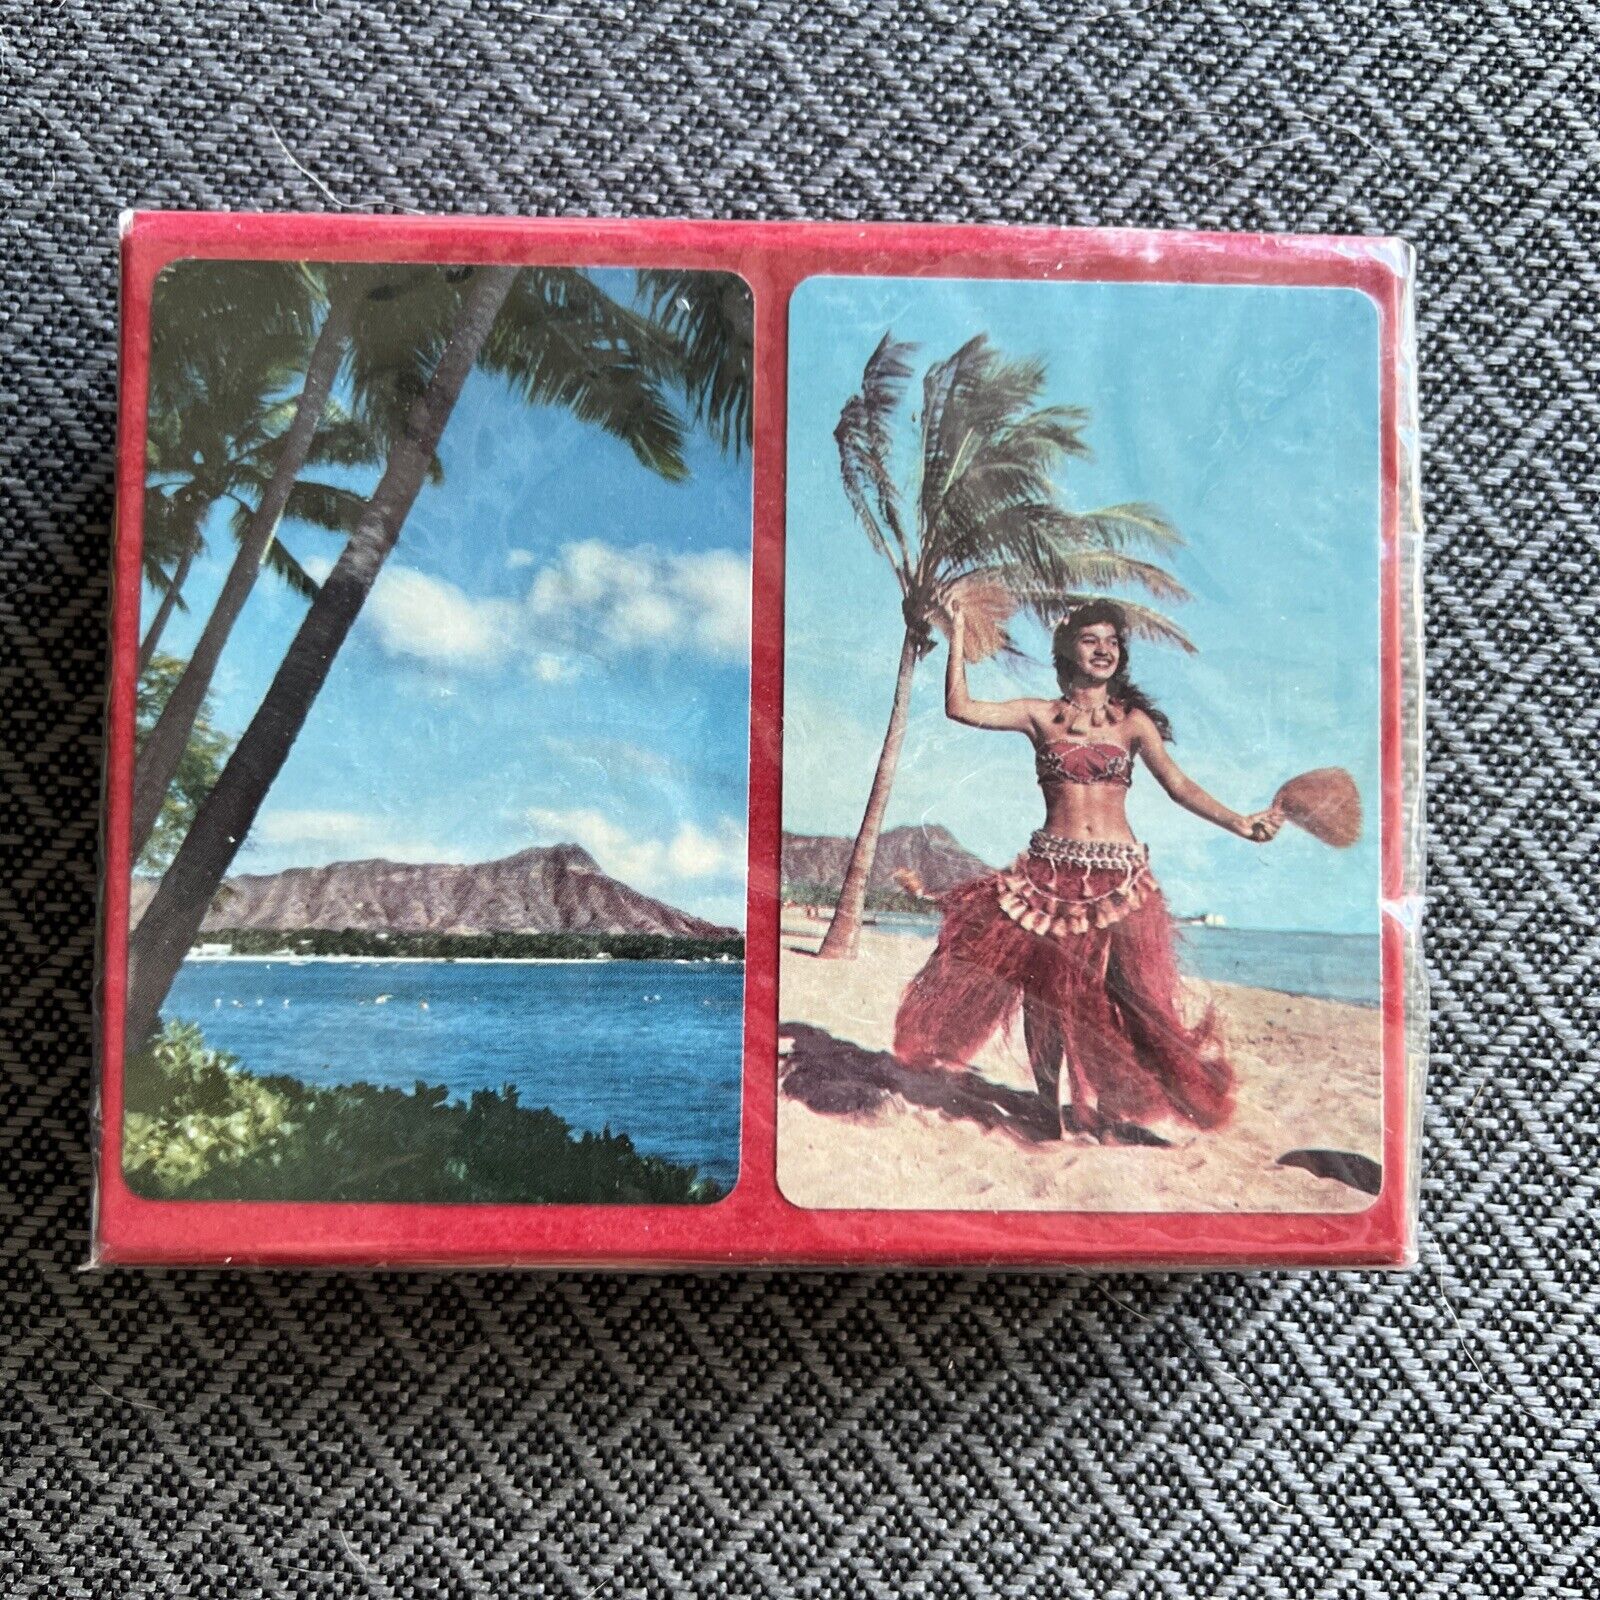 Vintage 50’s Hula Girl Playing Cards Souvenir of Hawaii 2 Decks Sealed